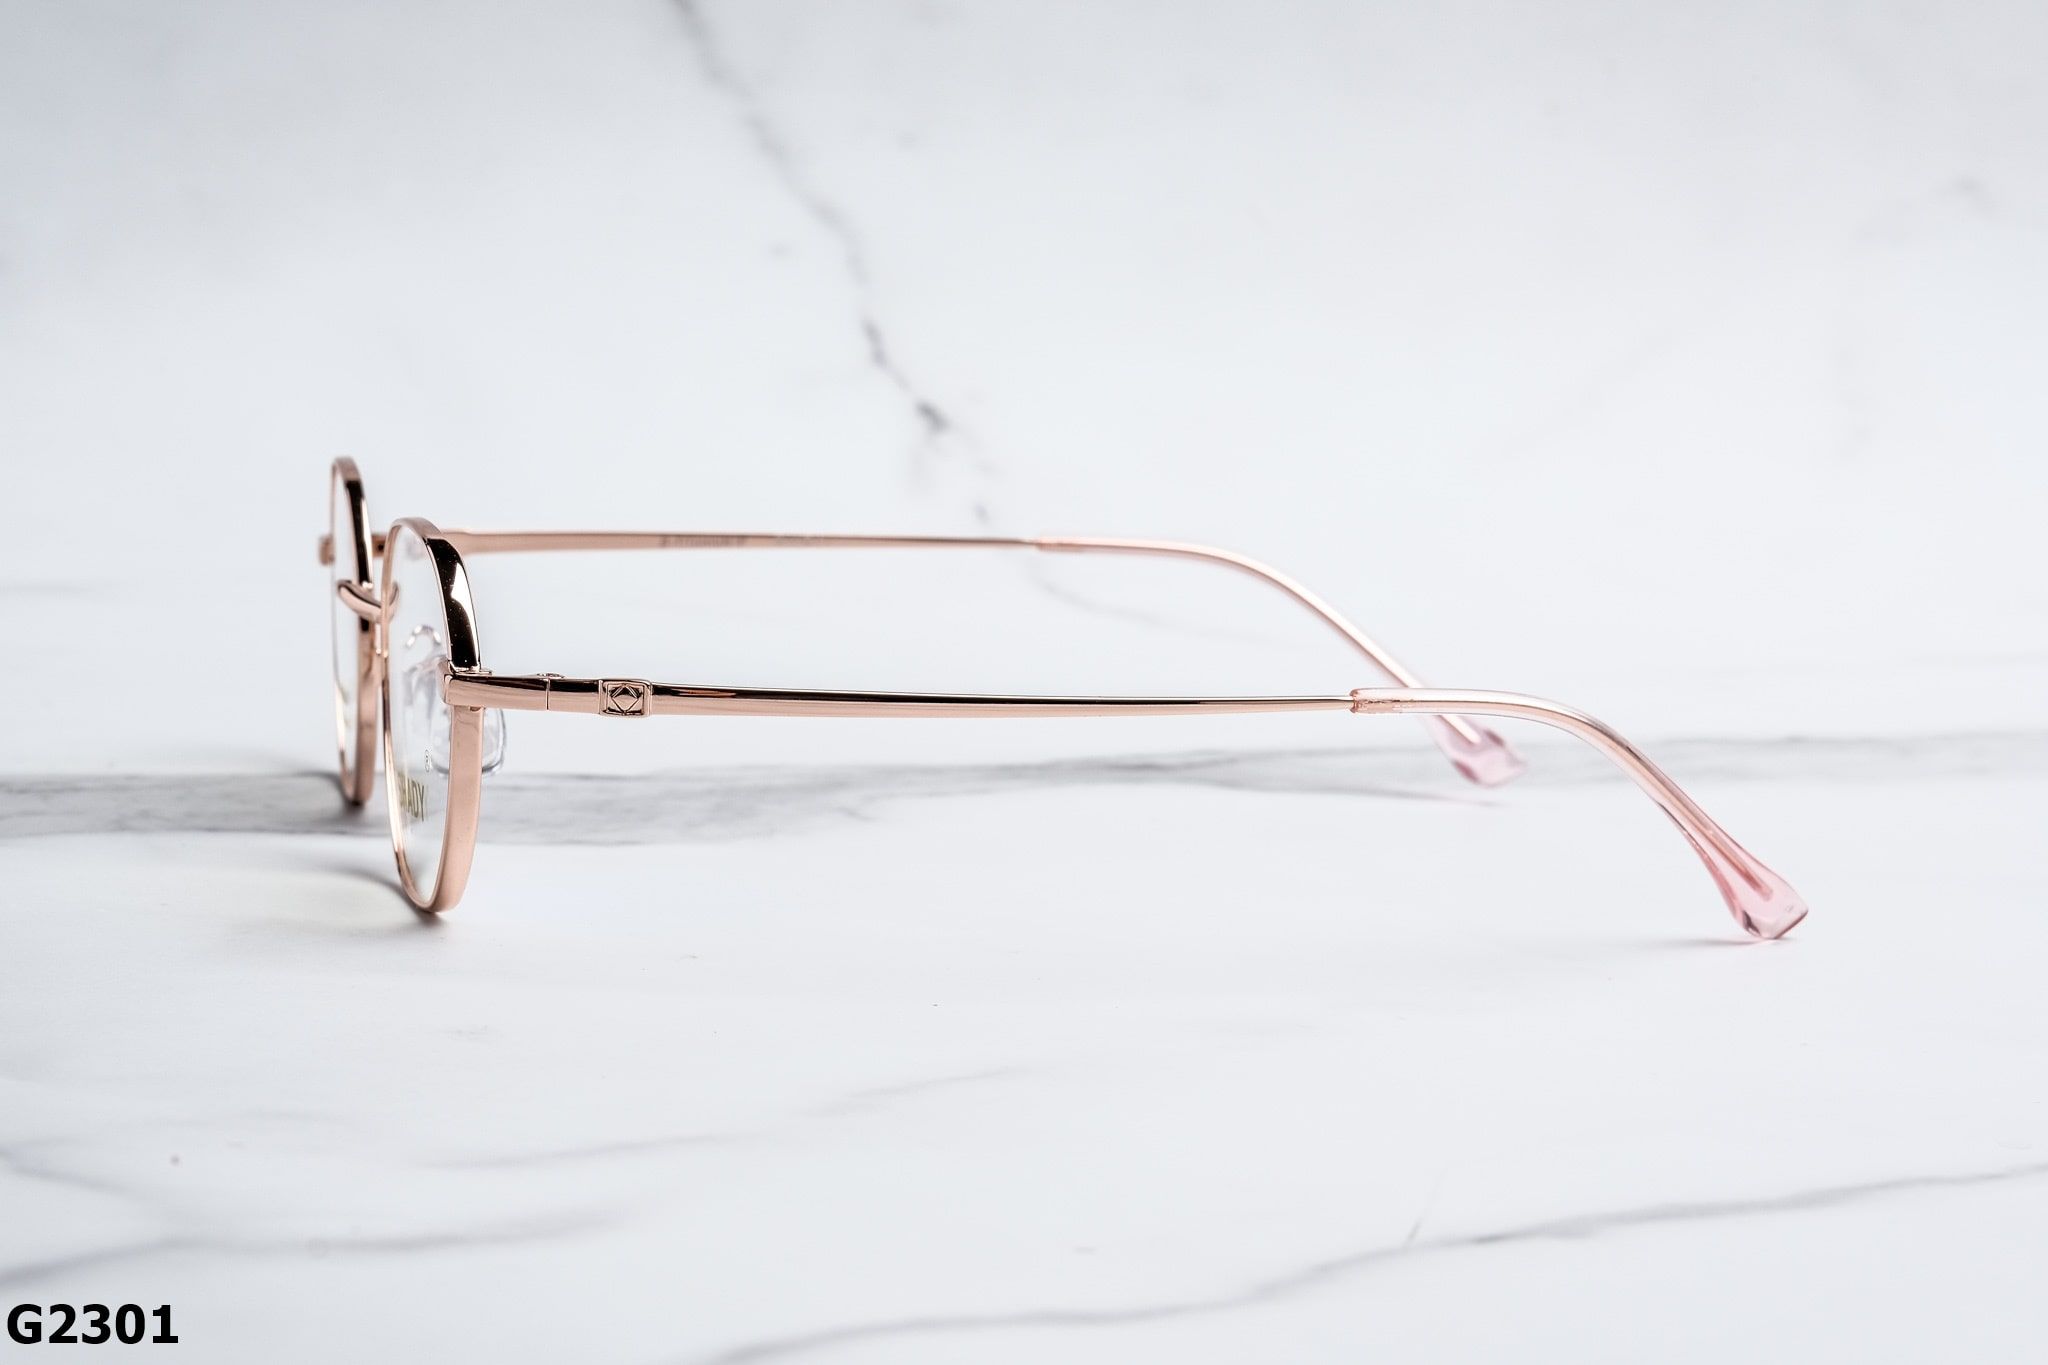  SHADY Eyewear - Glasses - G2301 